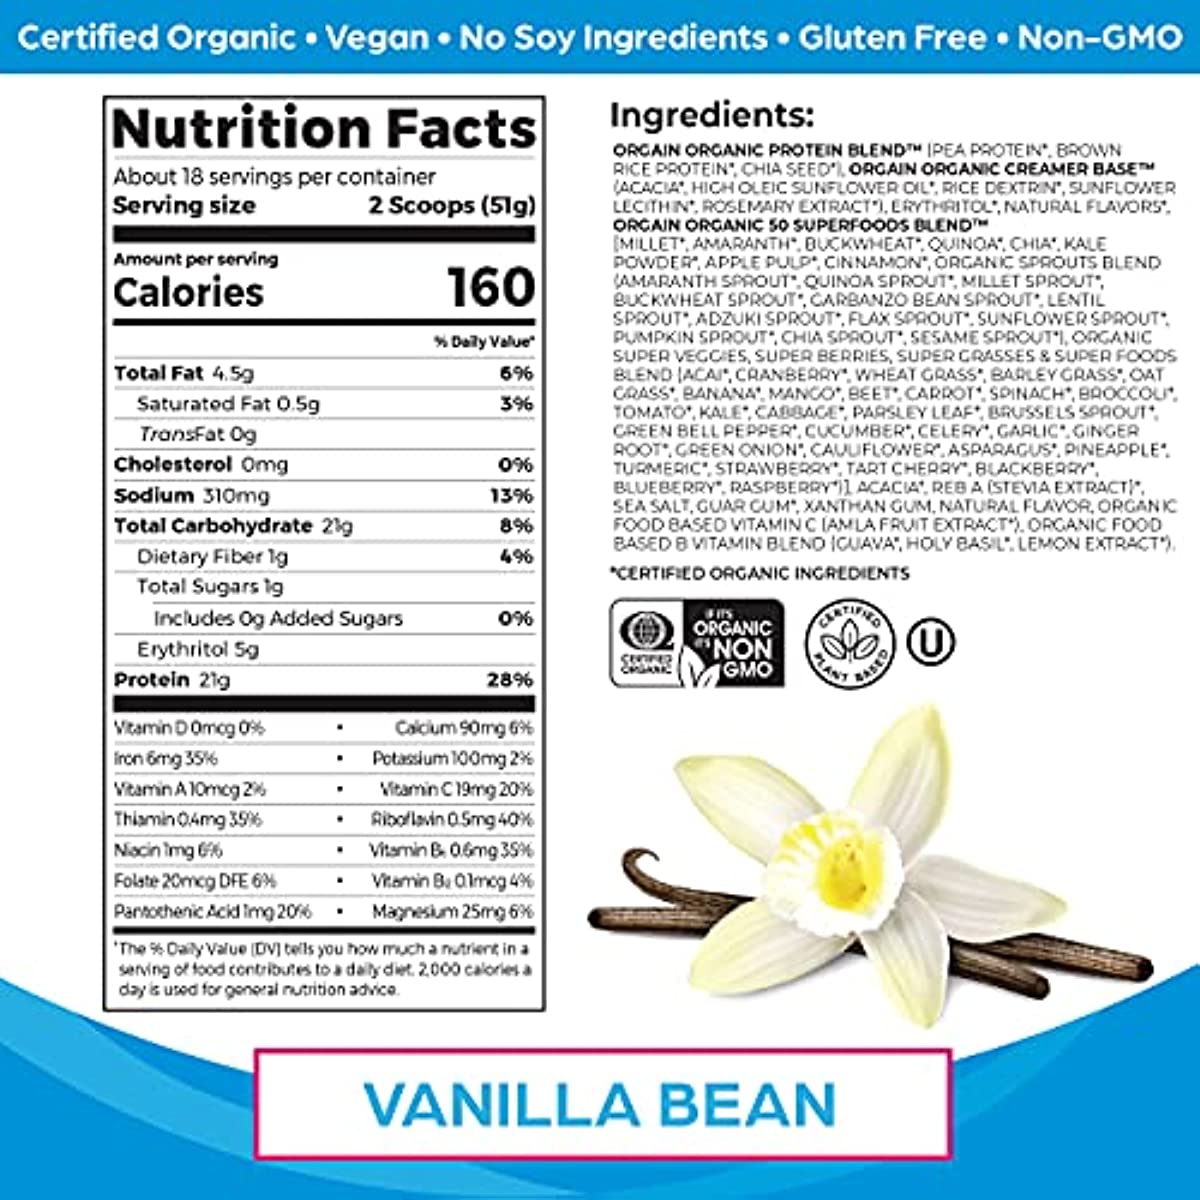 Orgain Organic Protein + Superfoods Powder, Vanilla Bean - 21g of Protein, Vegan, Plant Based, 5g of Fiber, No Dairy, Gluten, Soy or Added Sugar, Non-GMO, 2.02lb